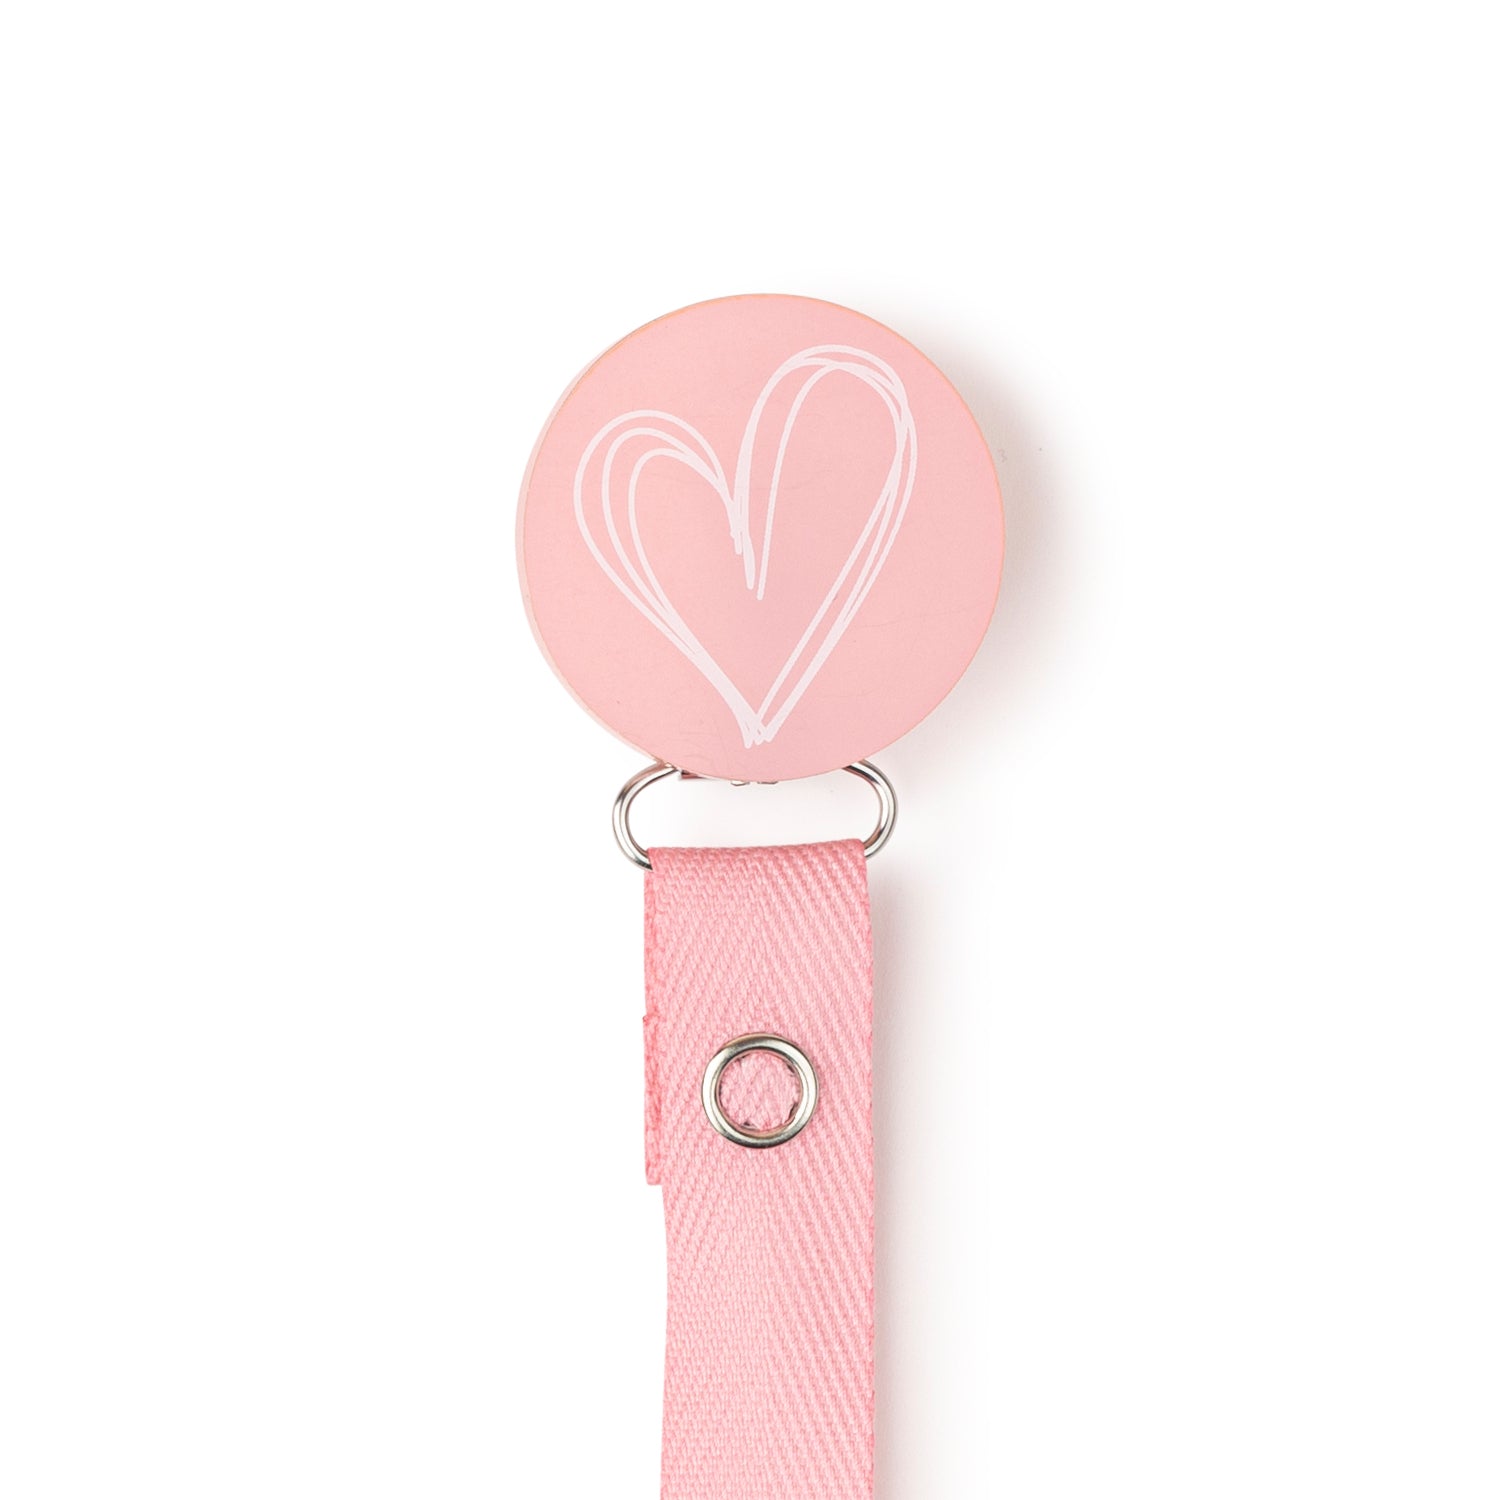 Classy Paci blush pink drawn white heart pacifier clip